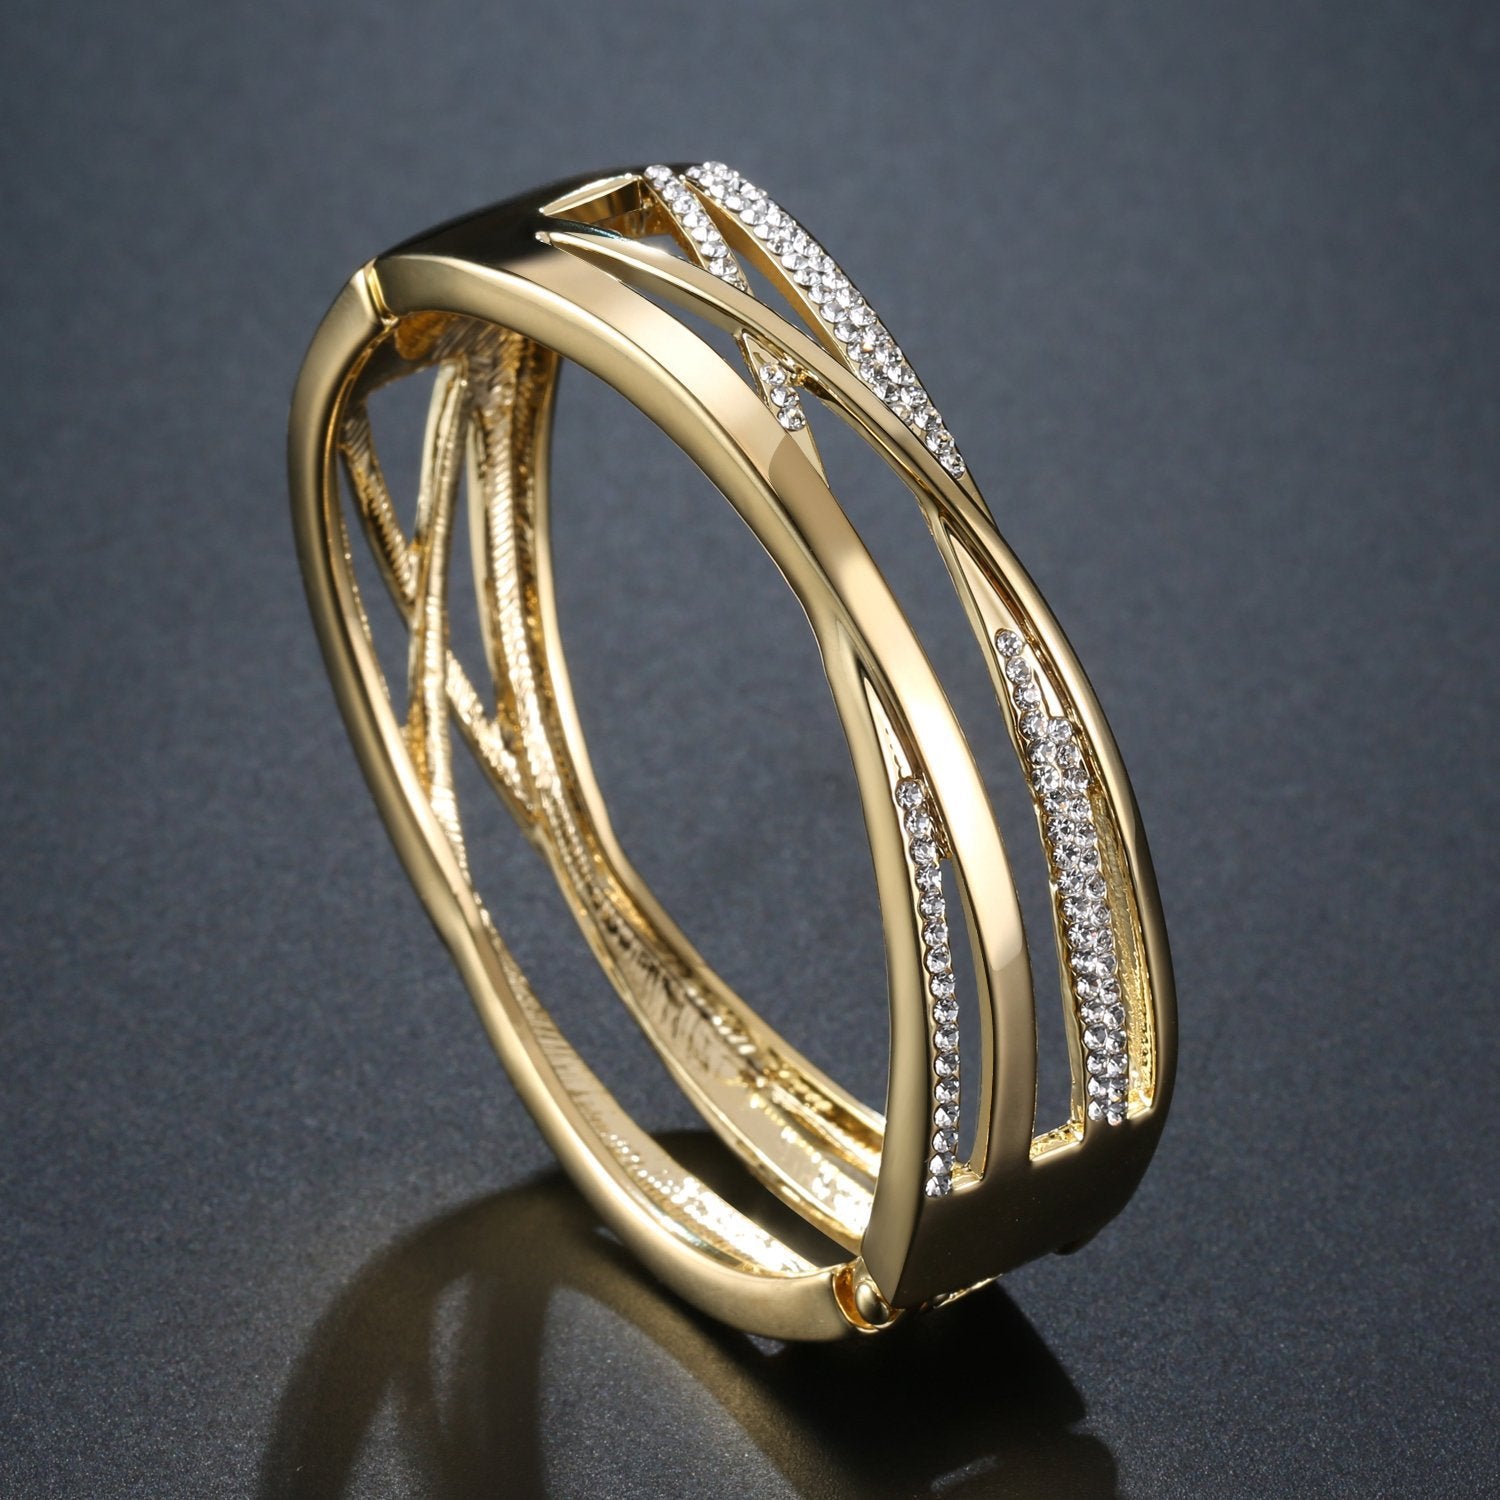 Golden Reflexions Bangle -KBQ0111 - KHAISTA Fashion Jewelry